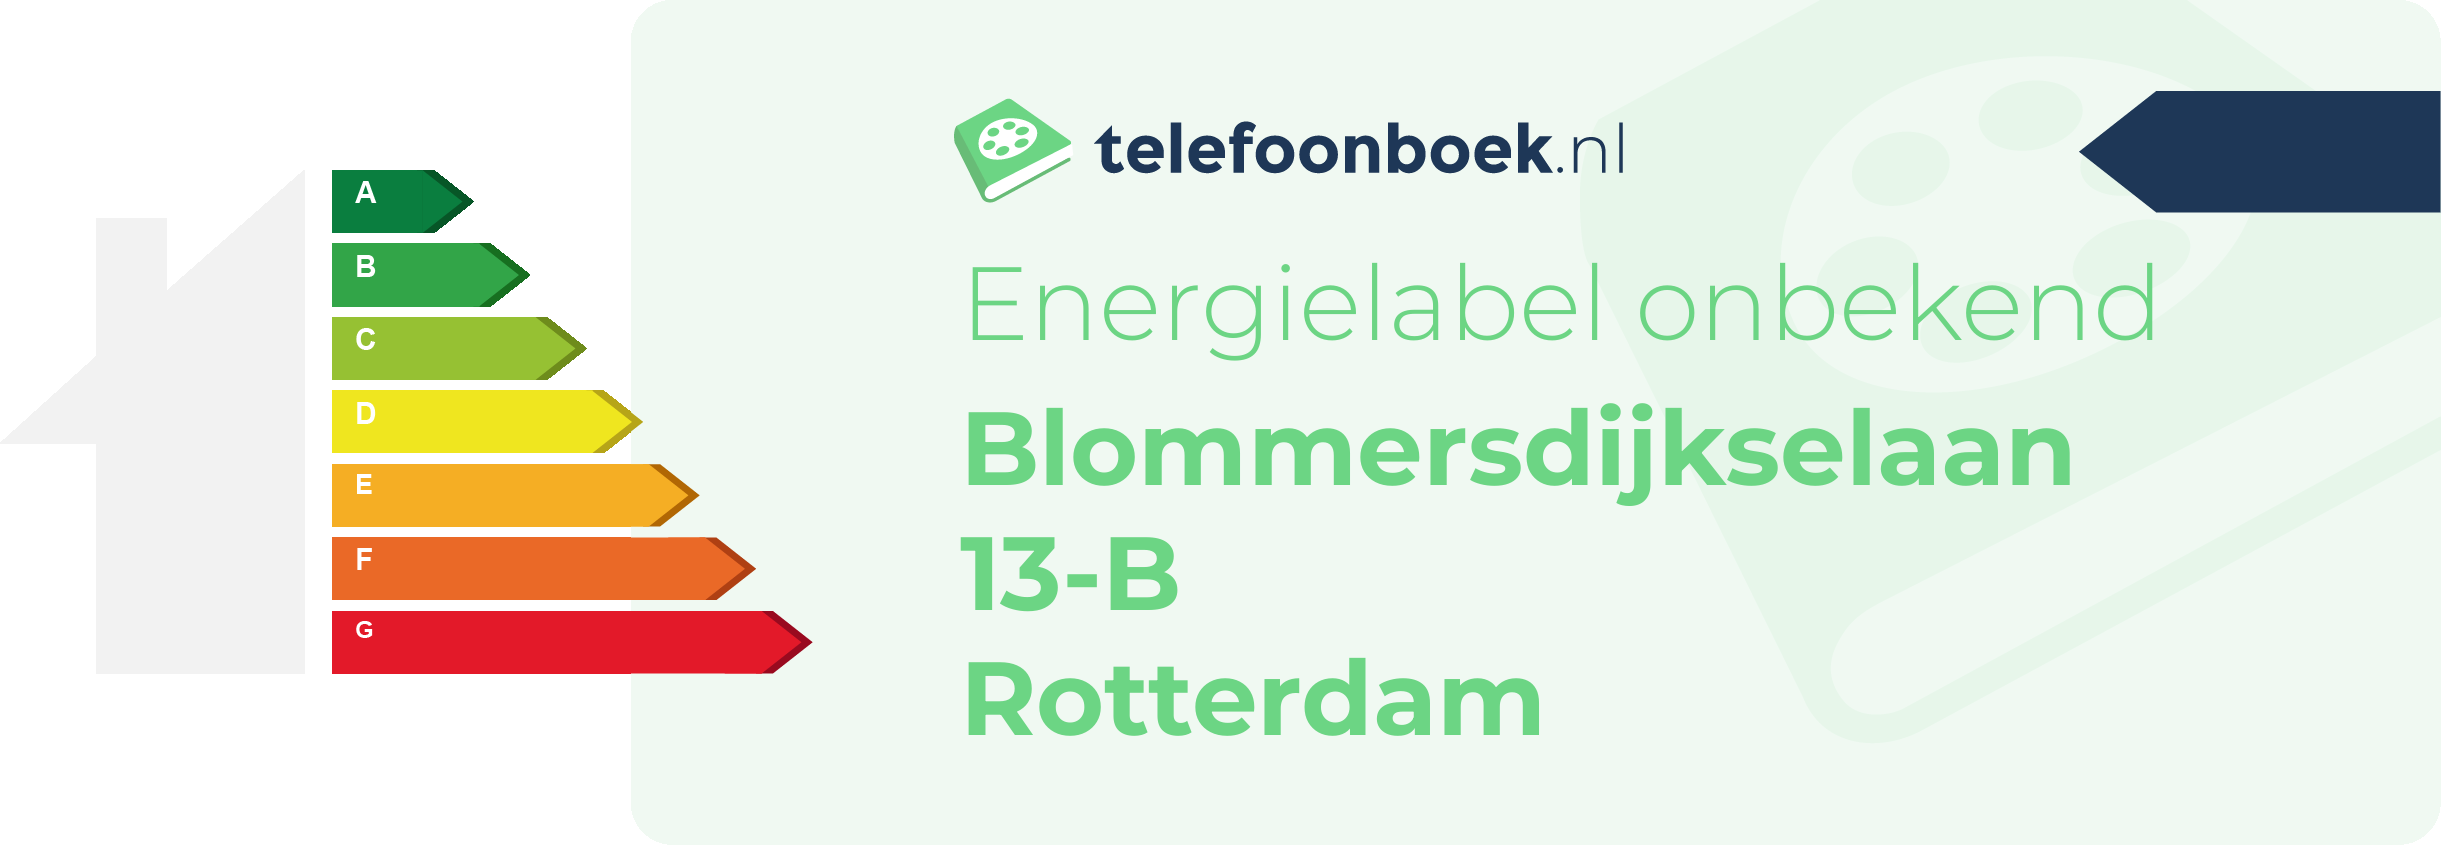 Energielabel Blommersdijkselaan 13-B Rotterdam